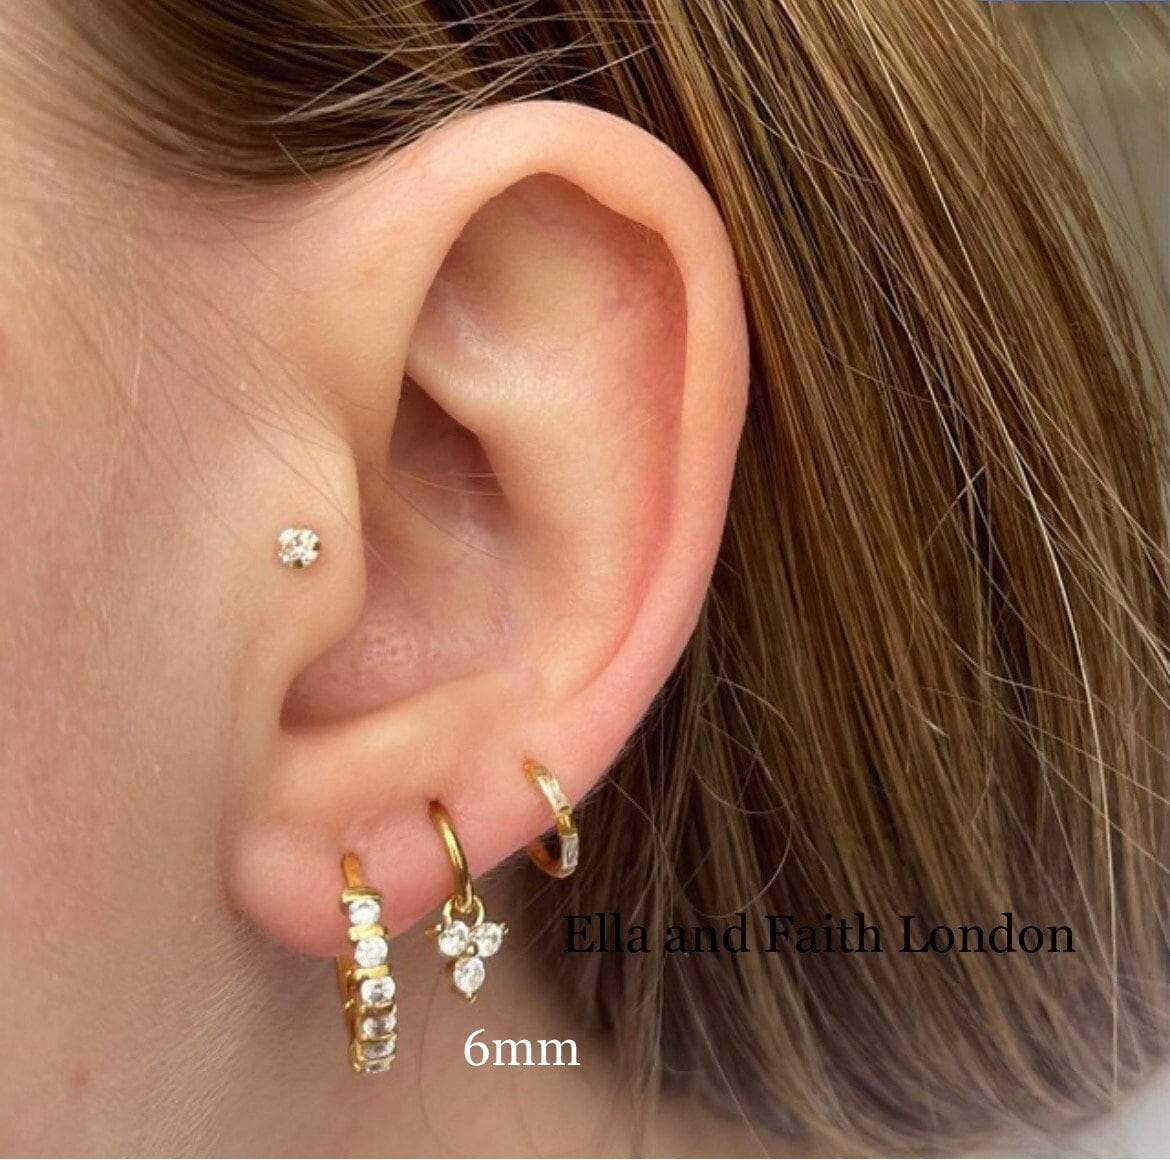 Tragus Piercing Jewelry | Tragus Earring Gold | Ella & Faith London